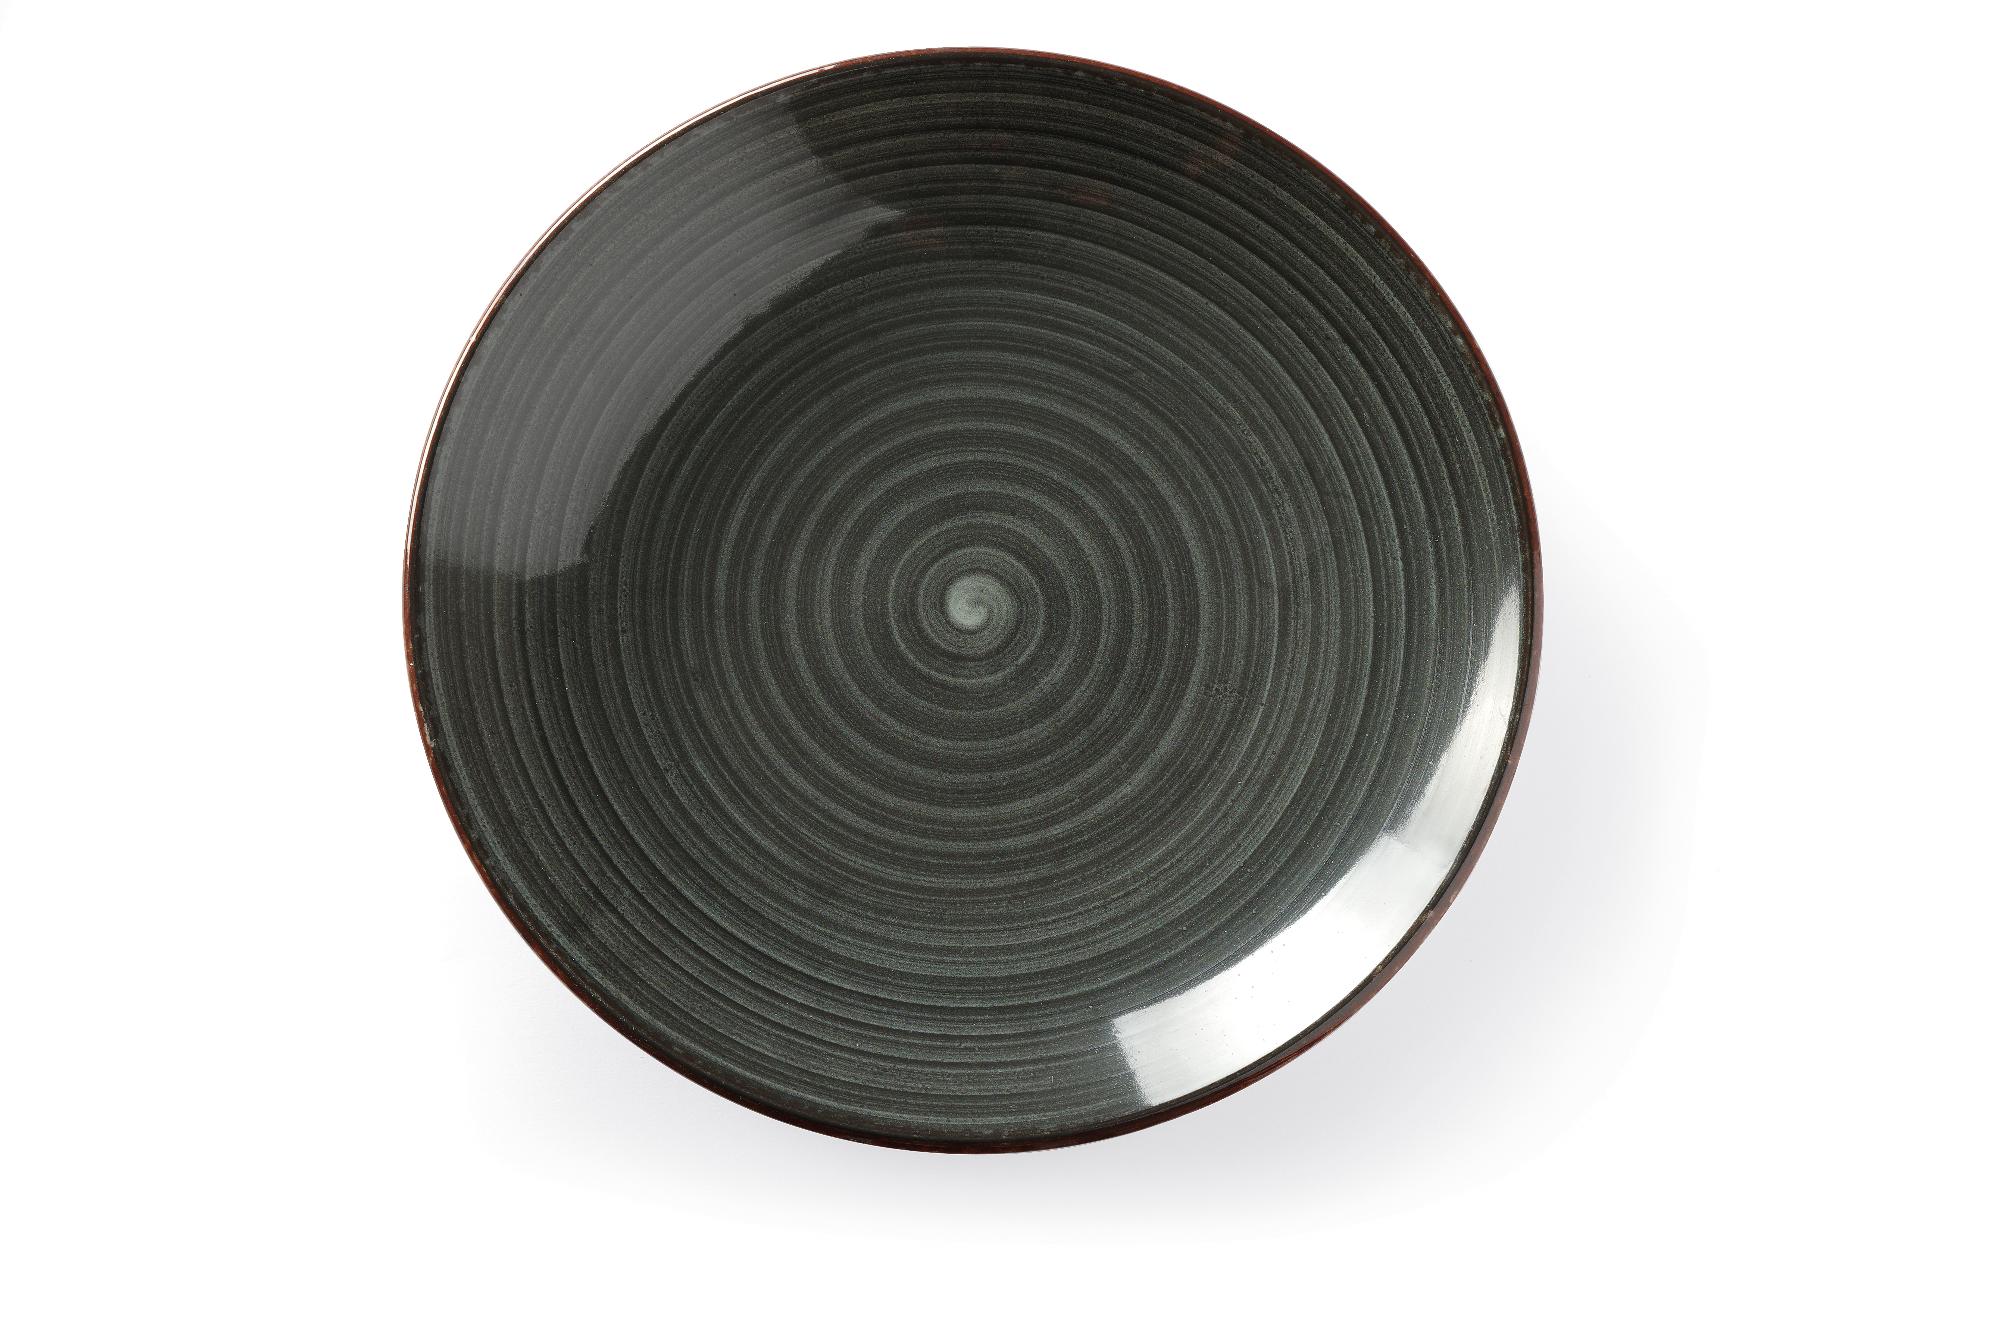 Onyx flat plate, 270mm